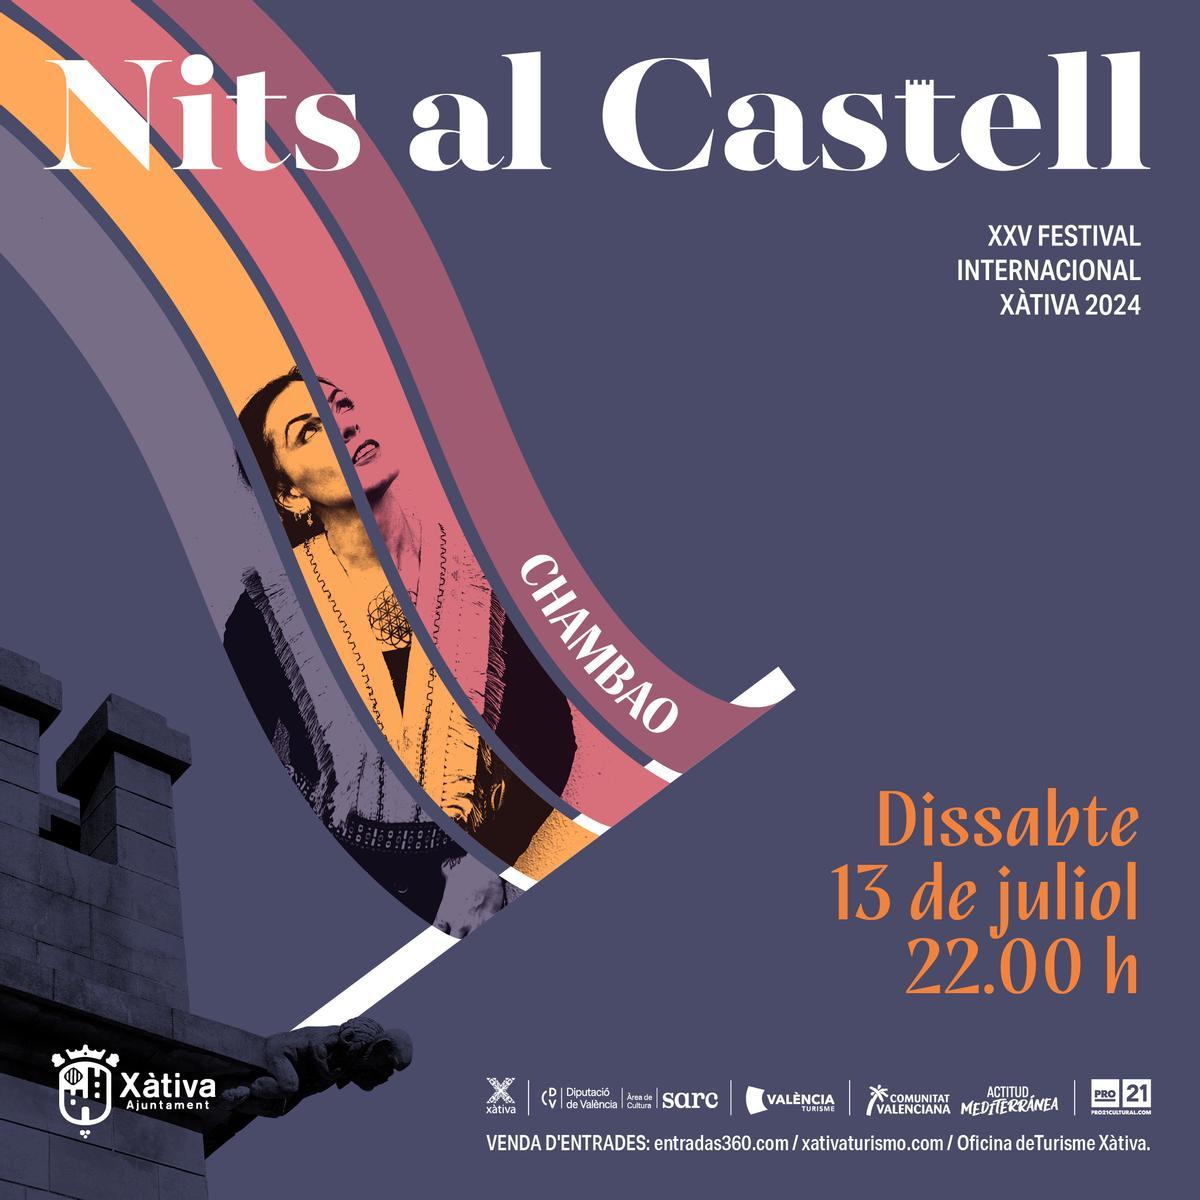 Chambao llega este sábado al Festival Nits al Castell de Xàtiva